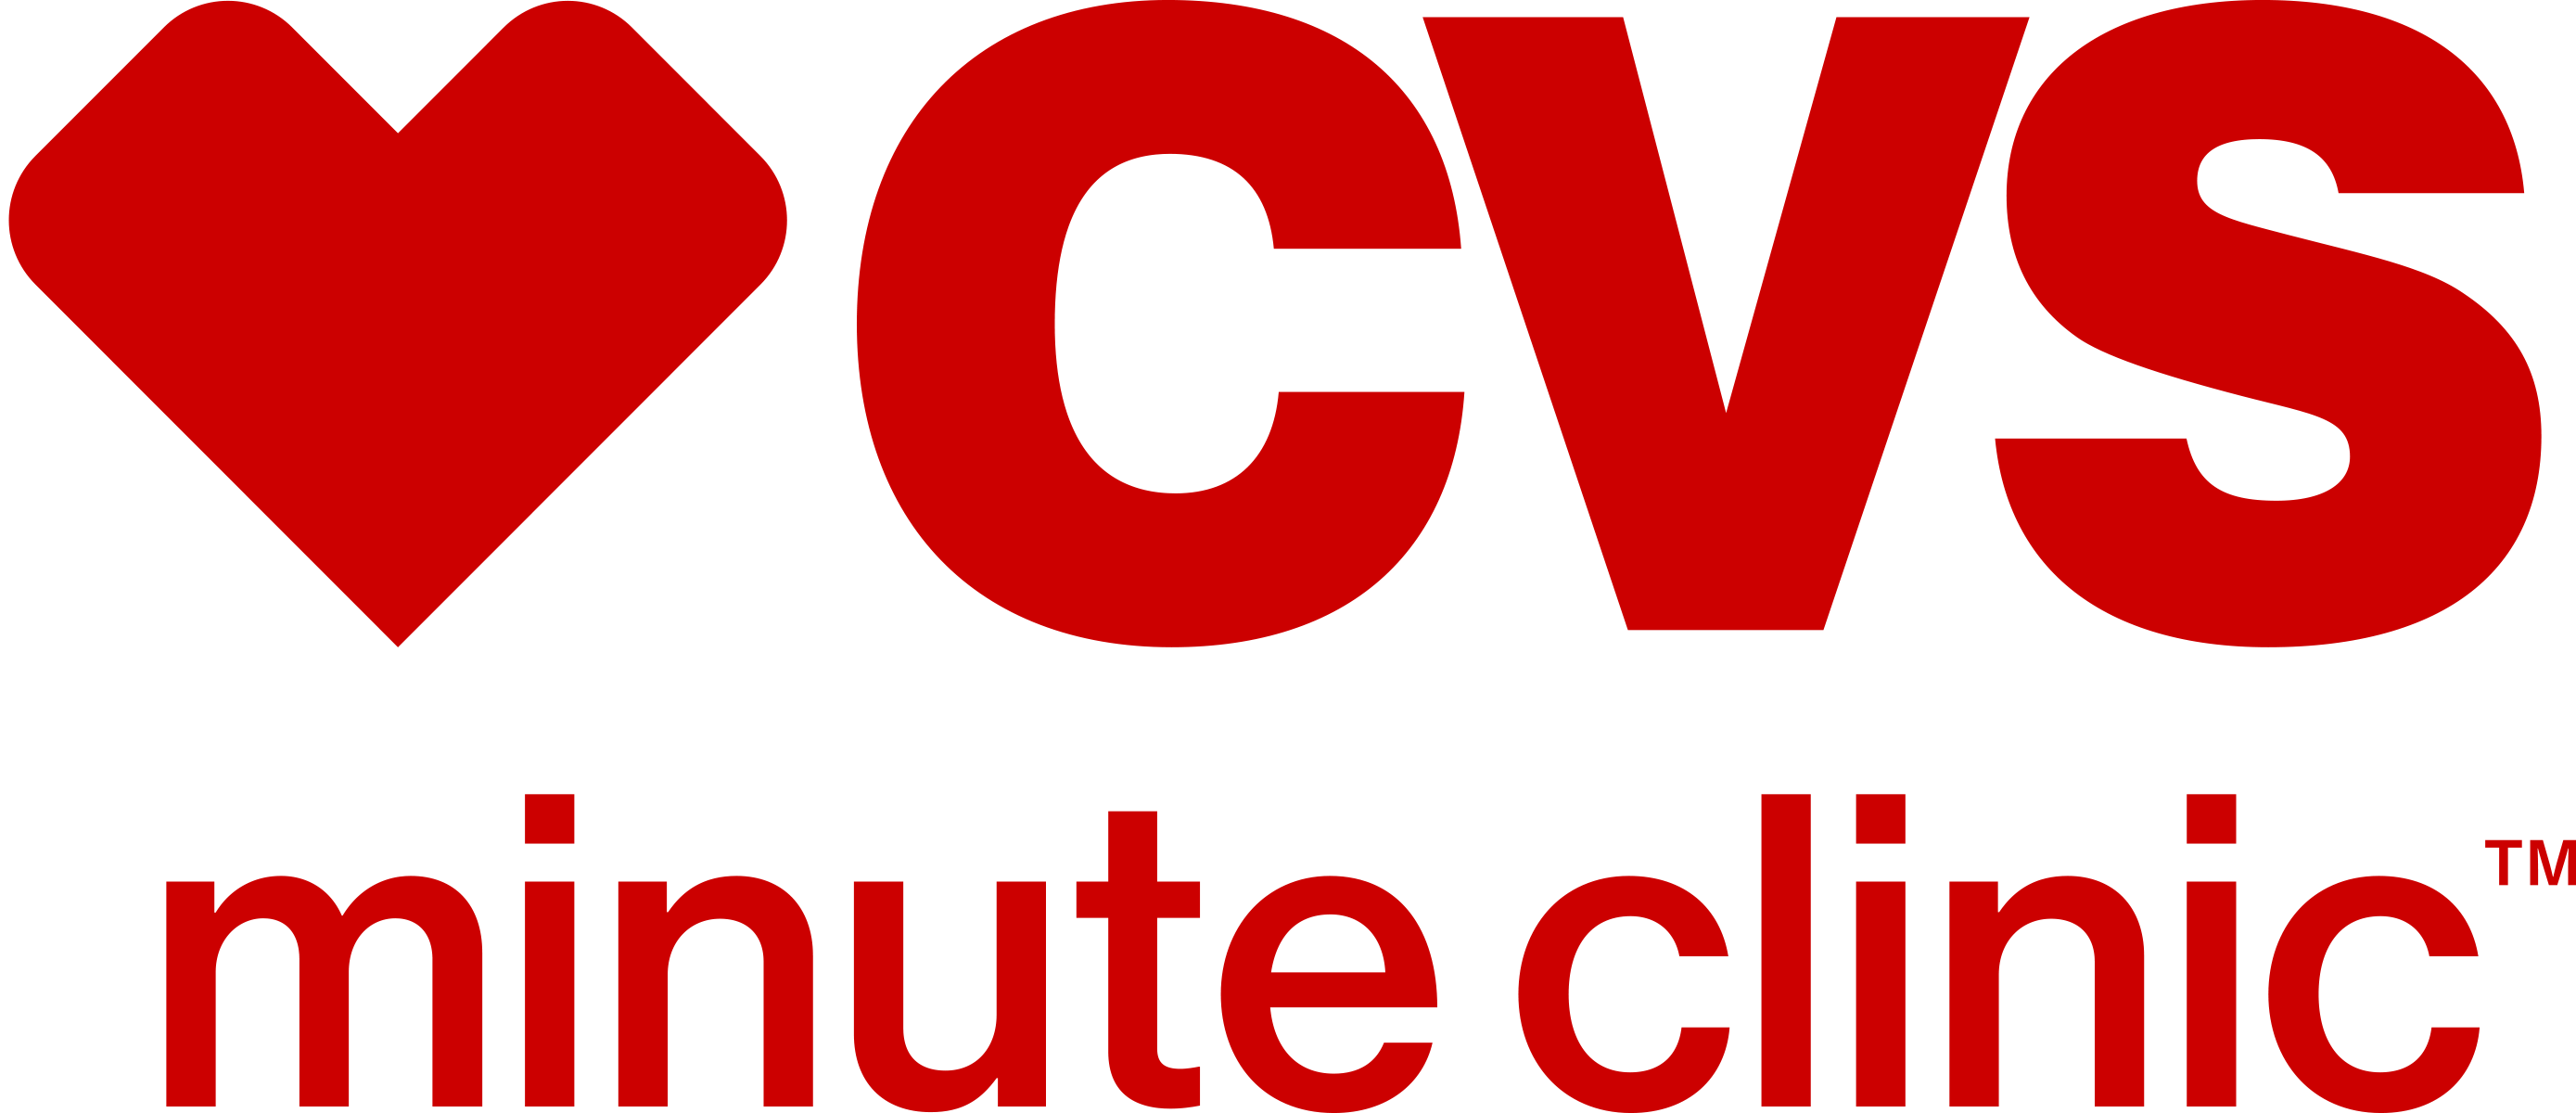 CVS Minute Clinic Logo